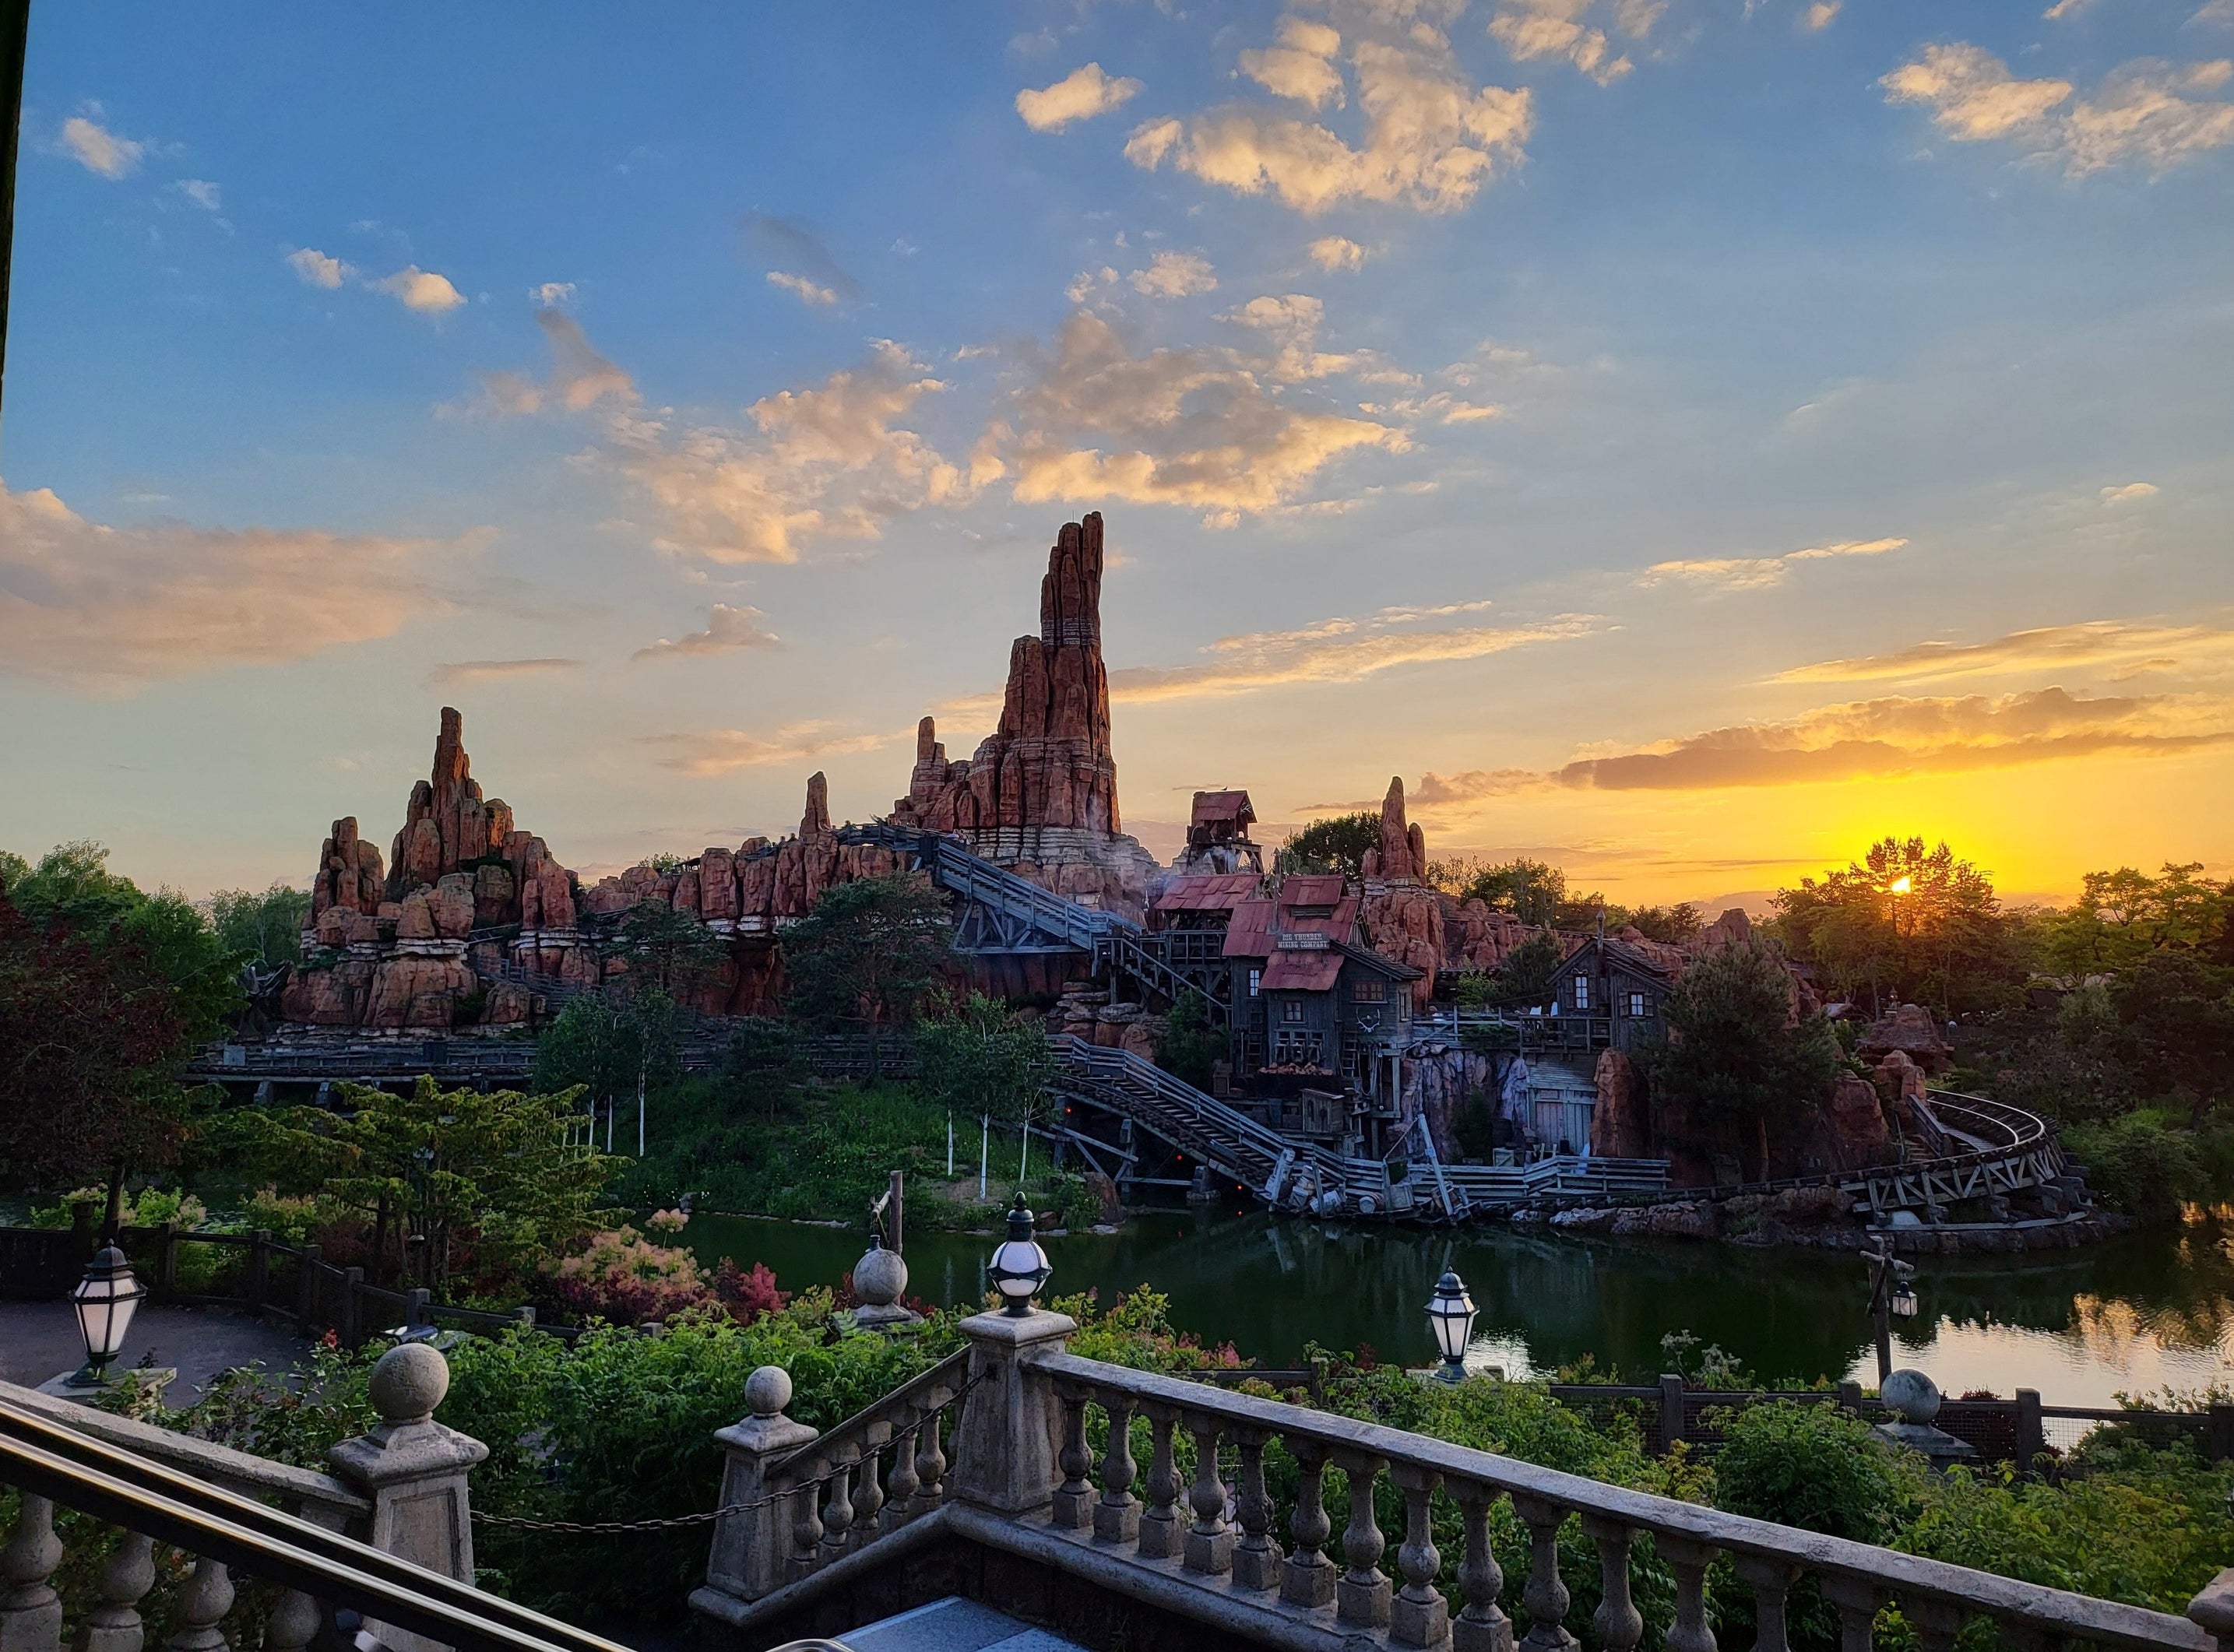 5 reasons to visit Disneyland® Paris in 2022